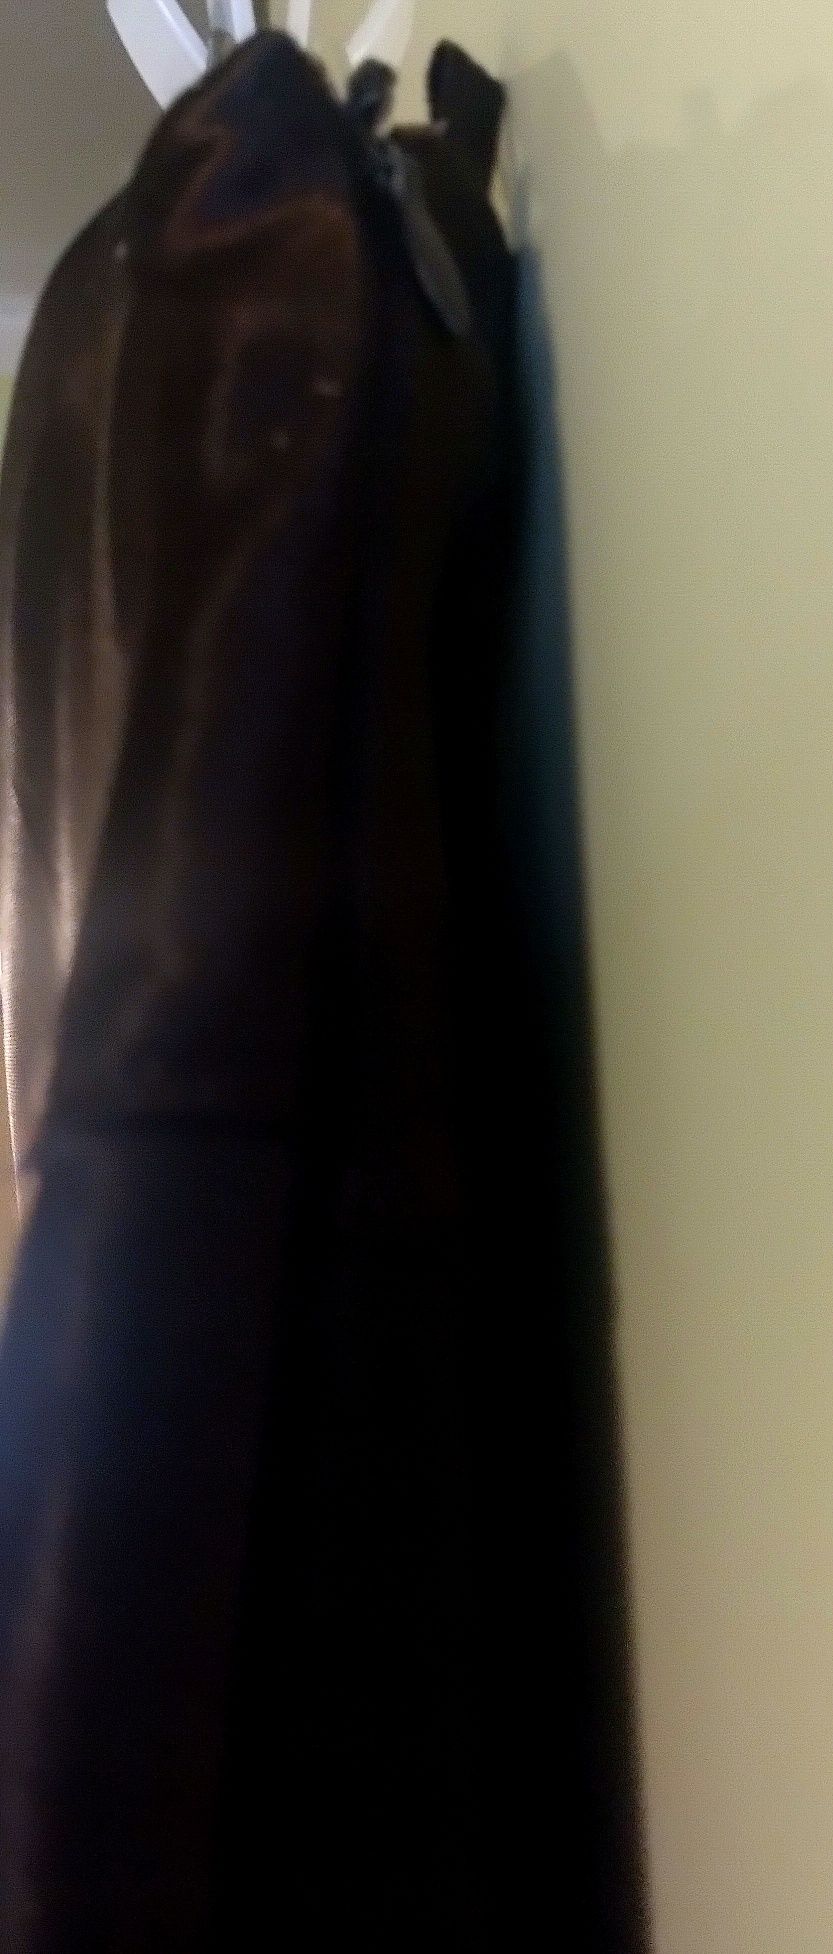 Elegancka ciemnobrązowa spódnica damska plus size